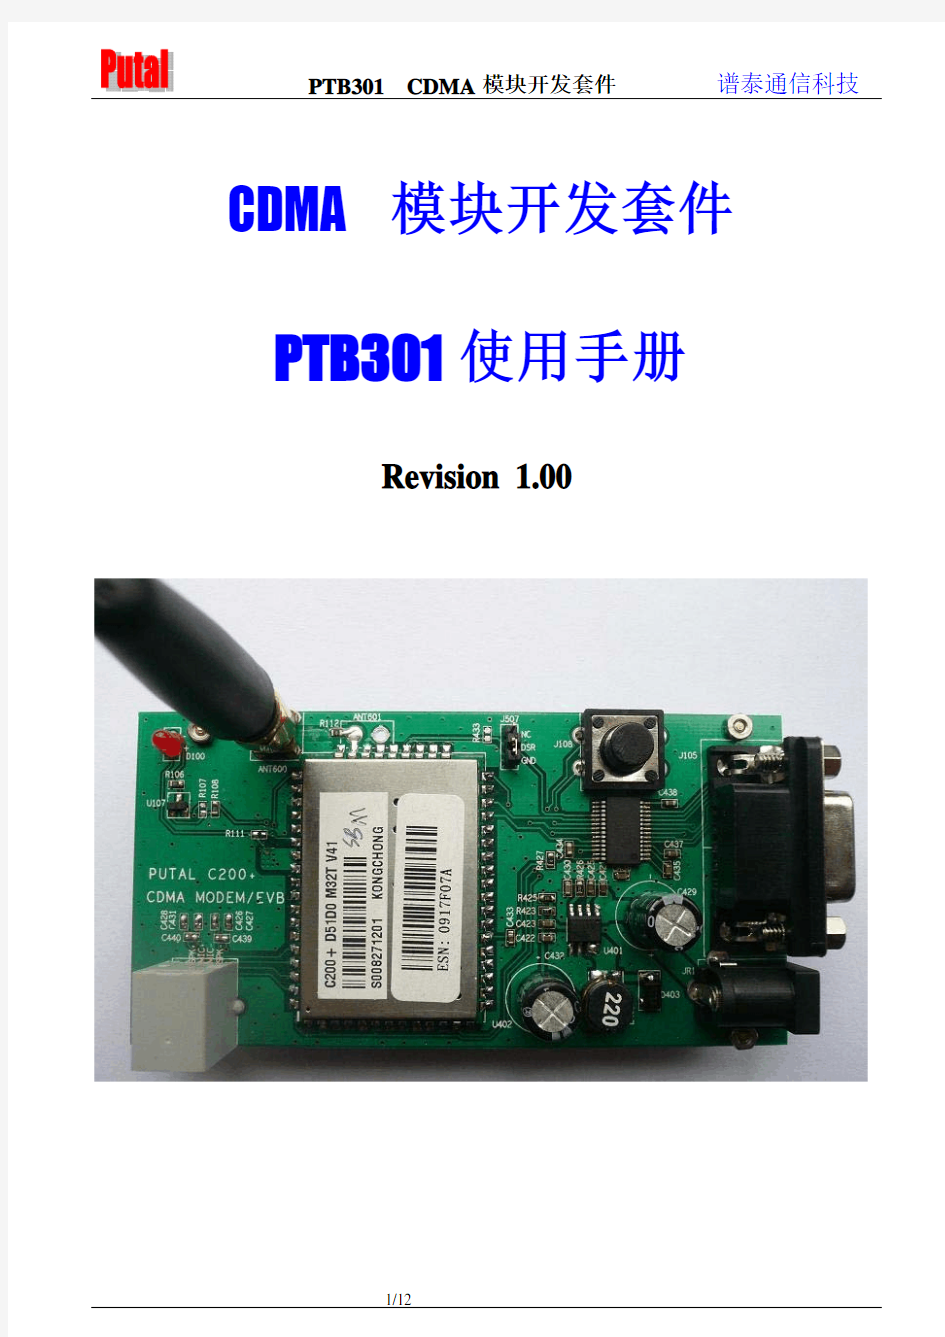 PTB301 CDMA模块开发板使用手册